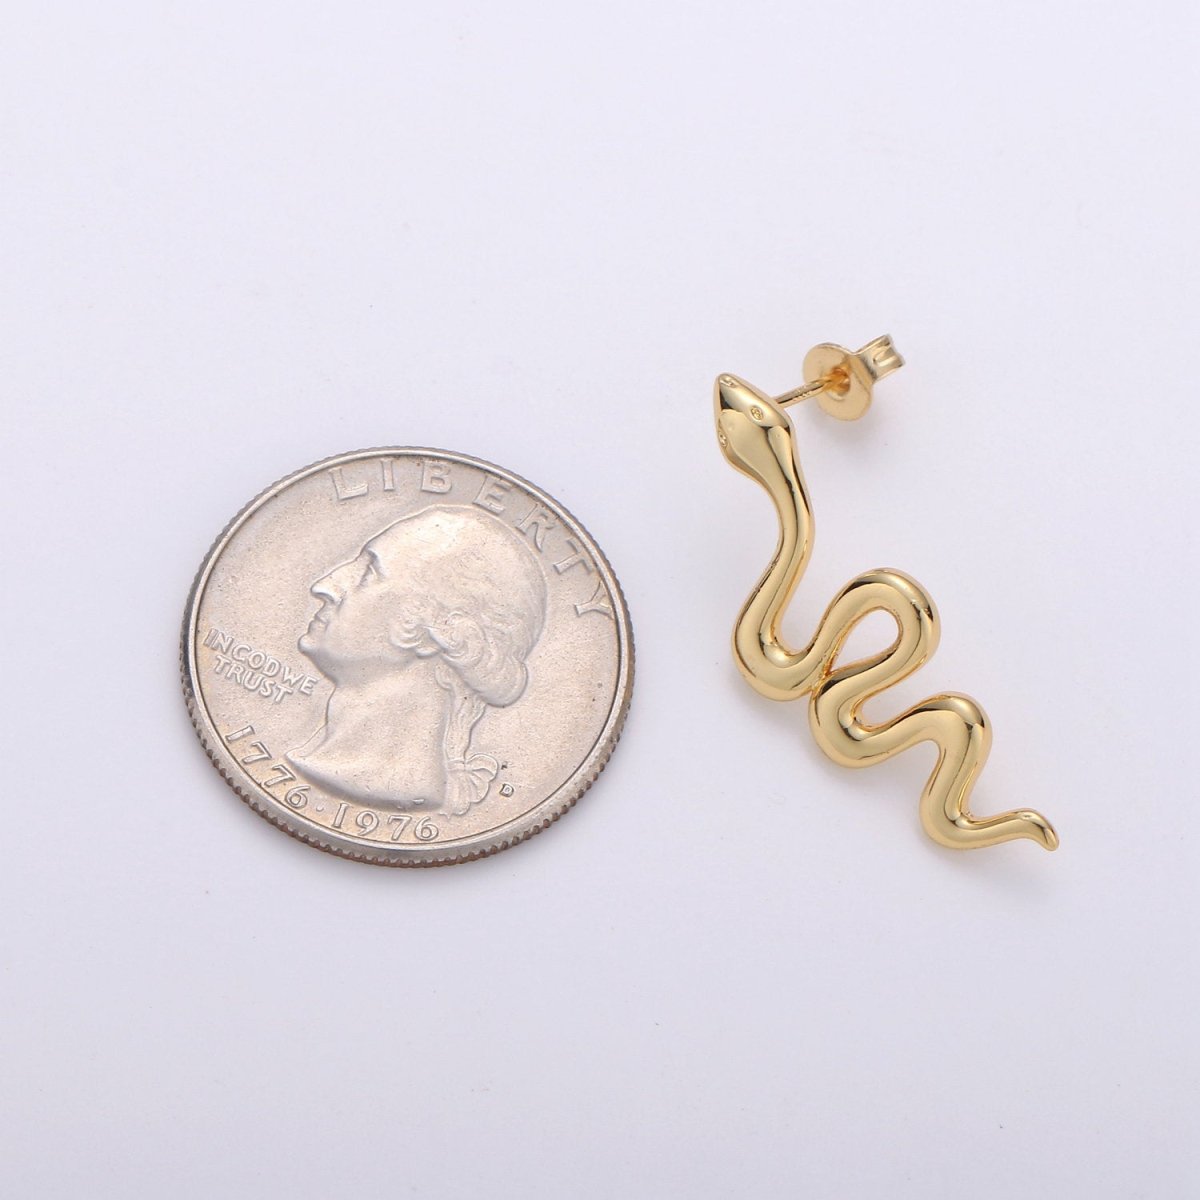 Overstock Gold Snake earrings, snake stud earrings, dainty earrings, Serpent earrings, delicate studs, gold earrings, minimalist earring K-542 - DLUXCA